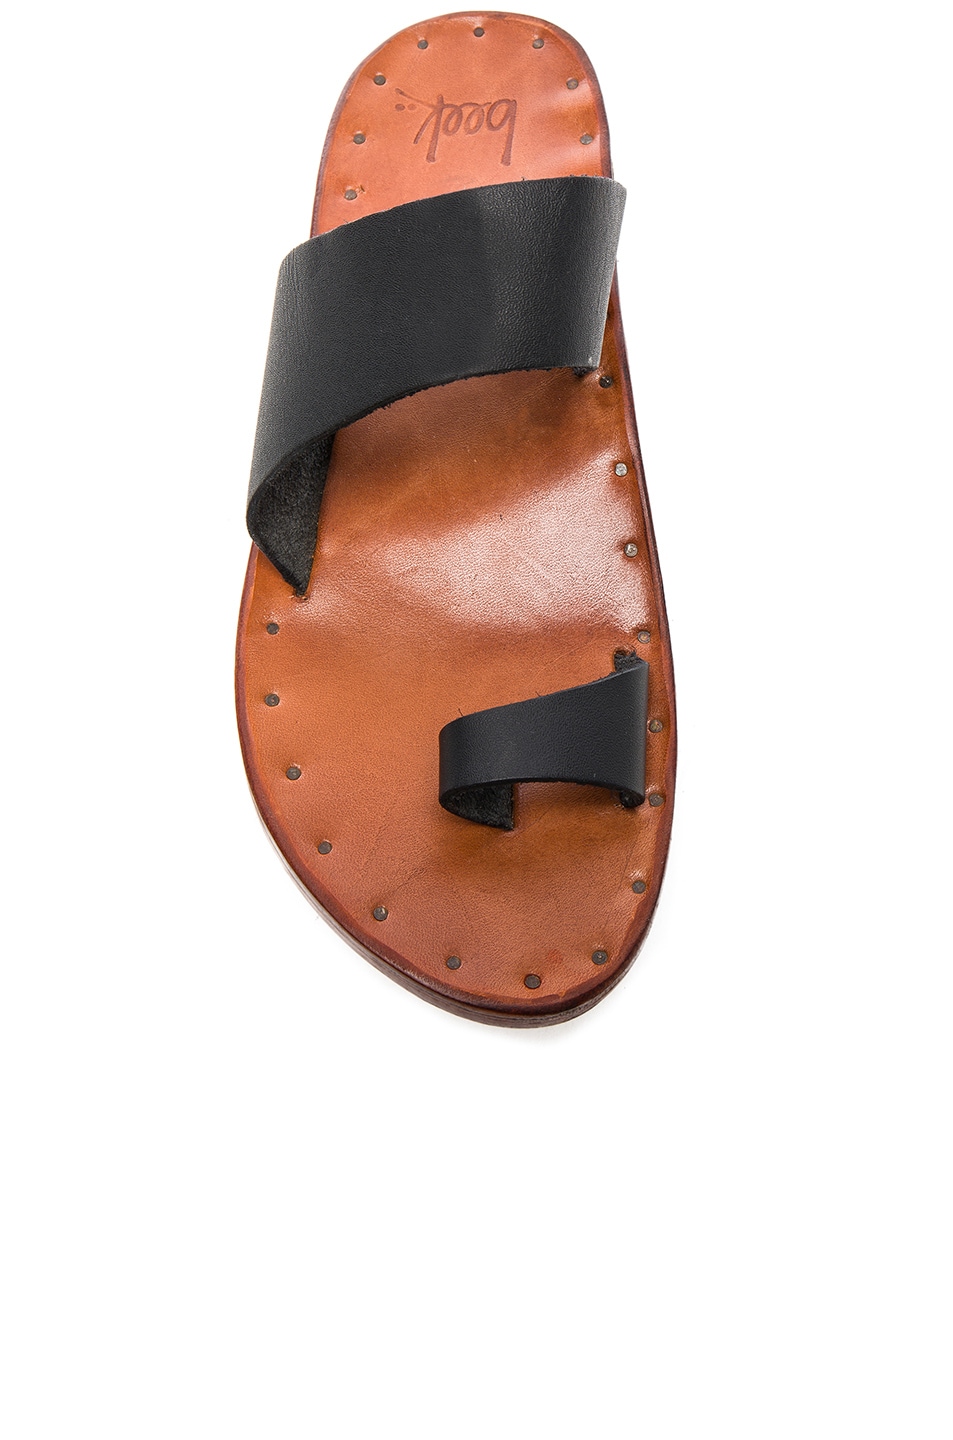 Beek Leather Finch Sandals in Black & Tan | FWRD